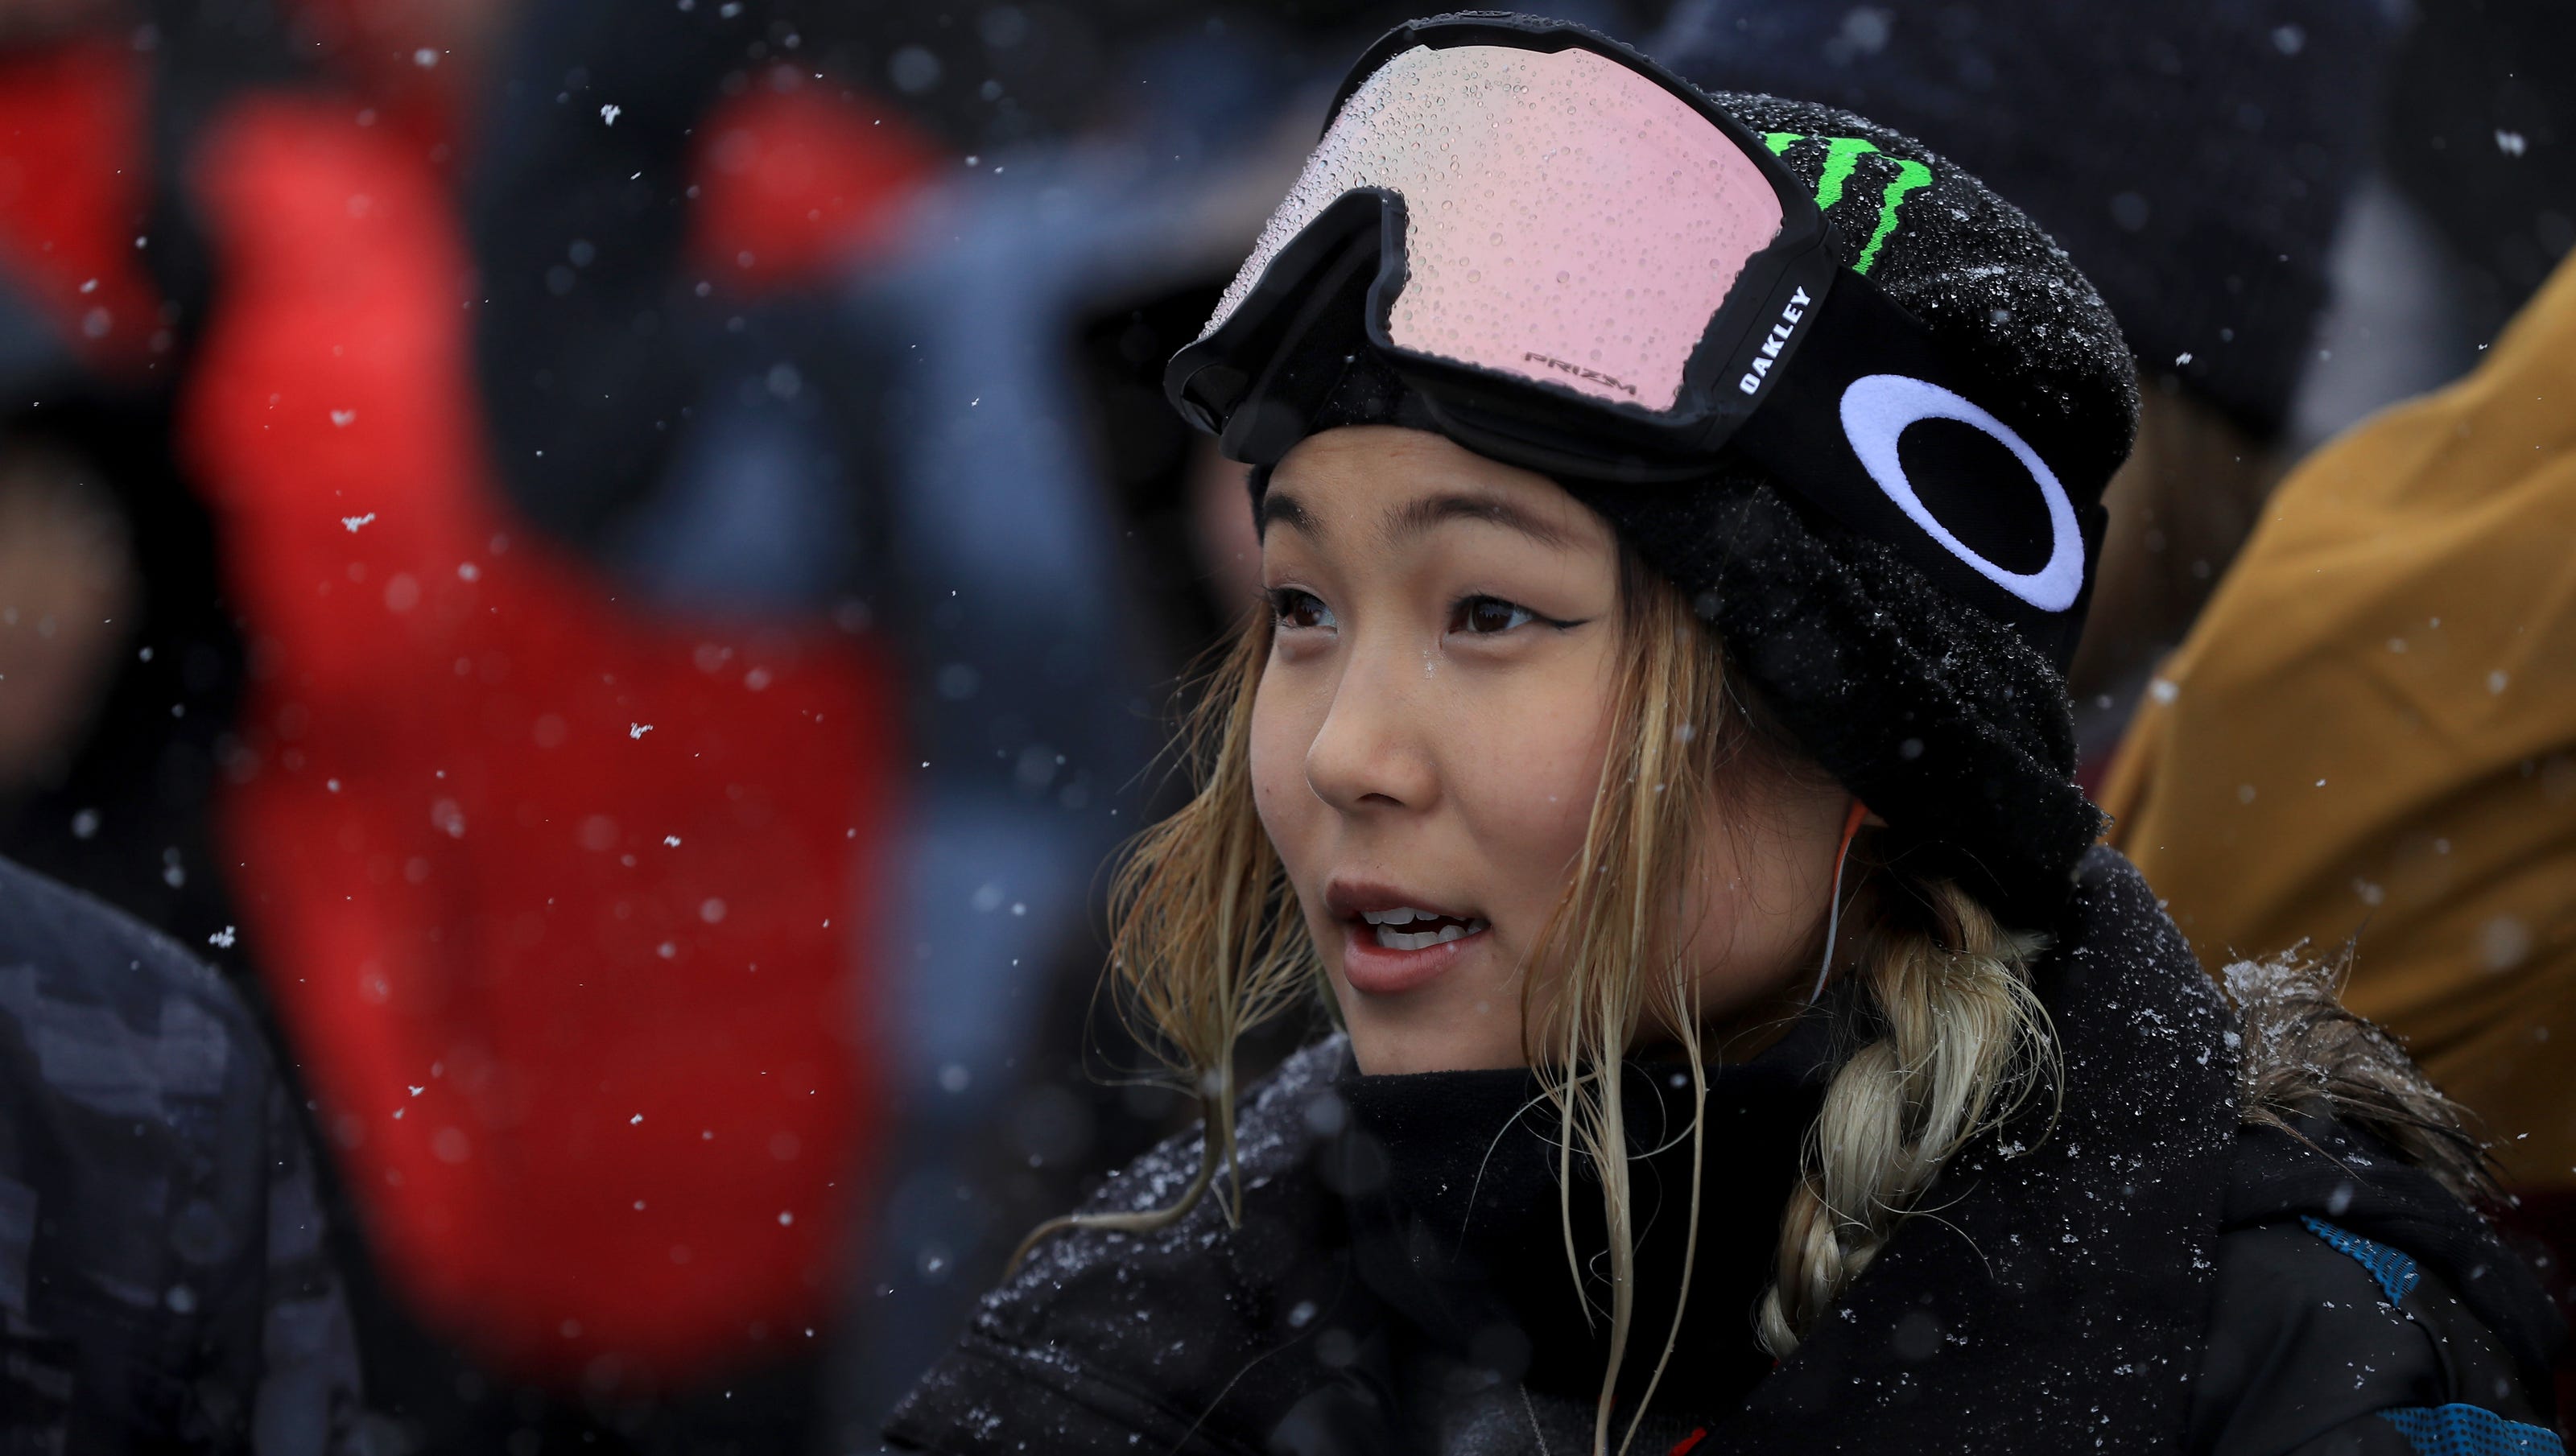 Teen Snowboarder Chloe Kim Still Has Fun Despite Expectations 